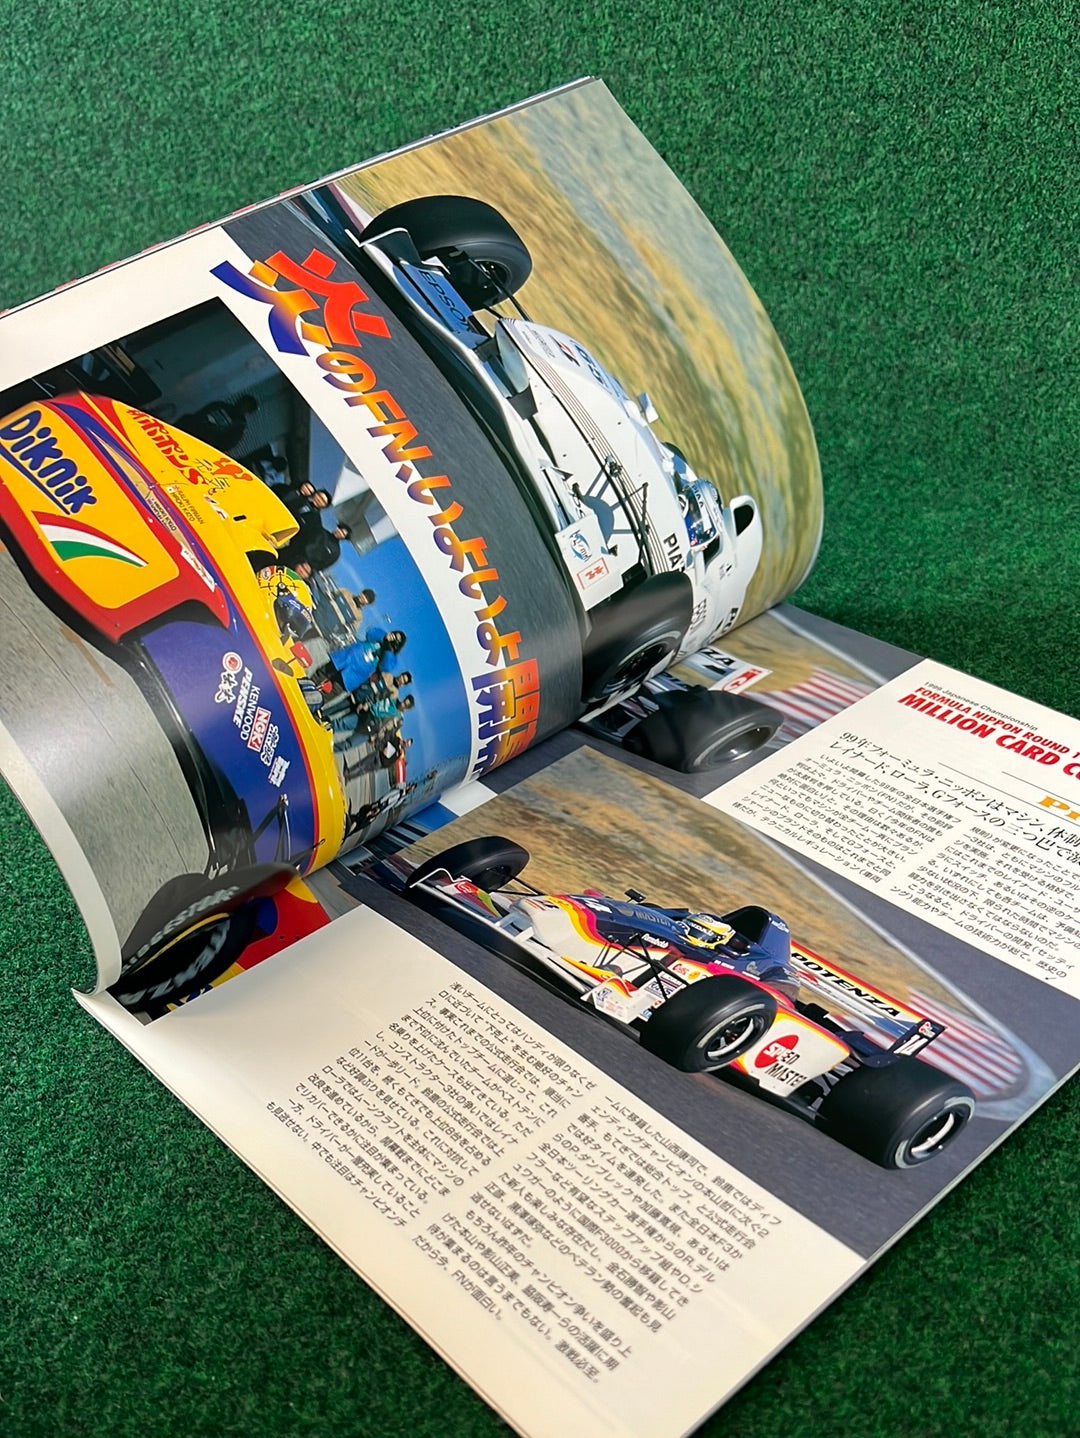 Formula Nippon - 1998 & 1999 Suzuka Circuit Race Event Programs Set of 3